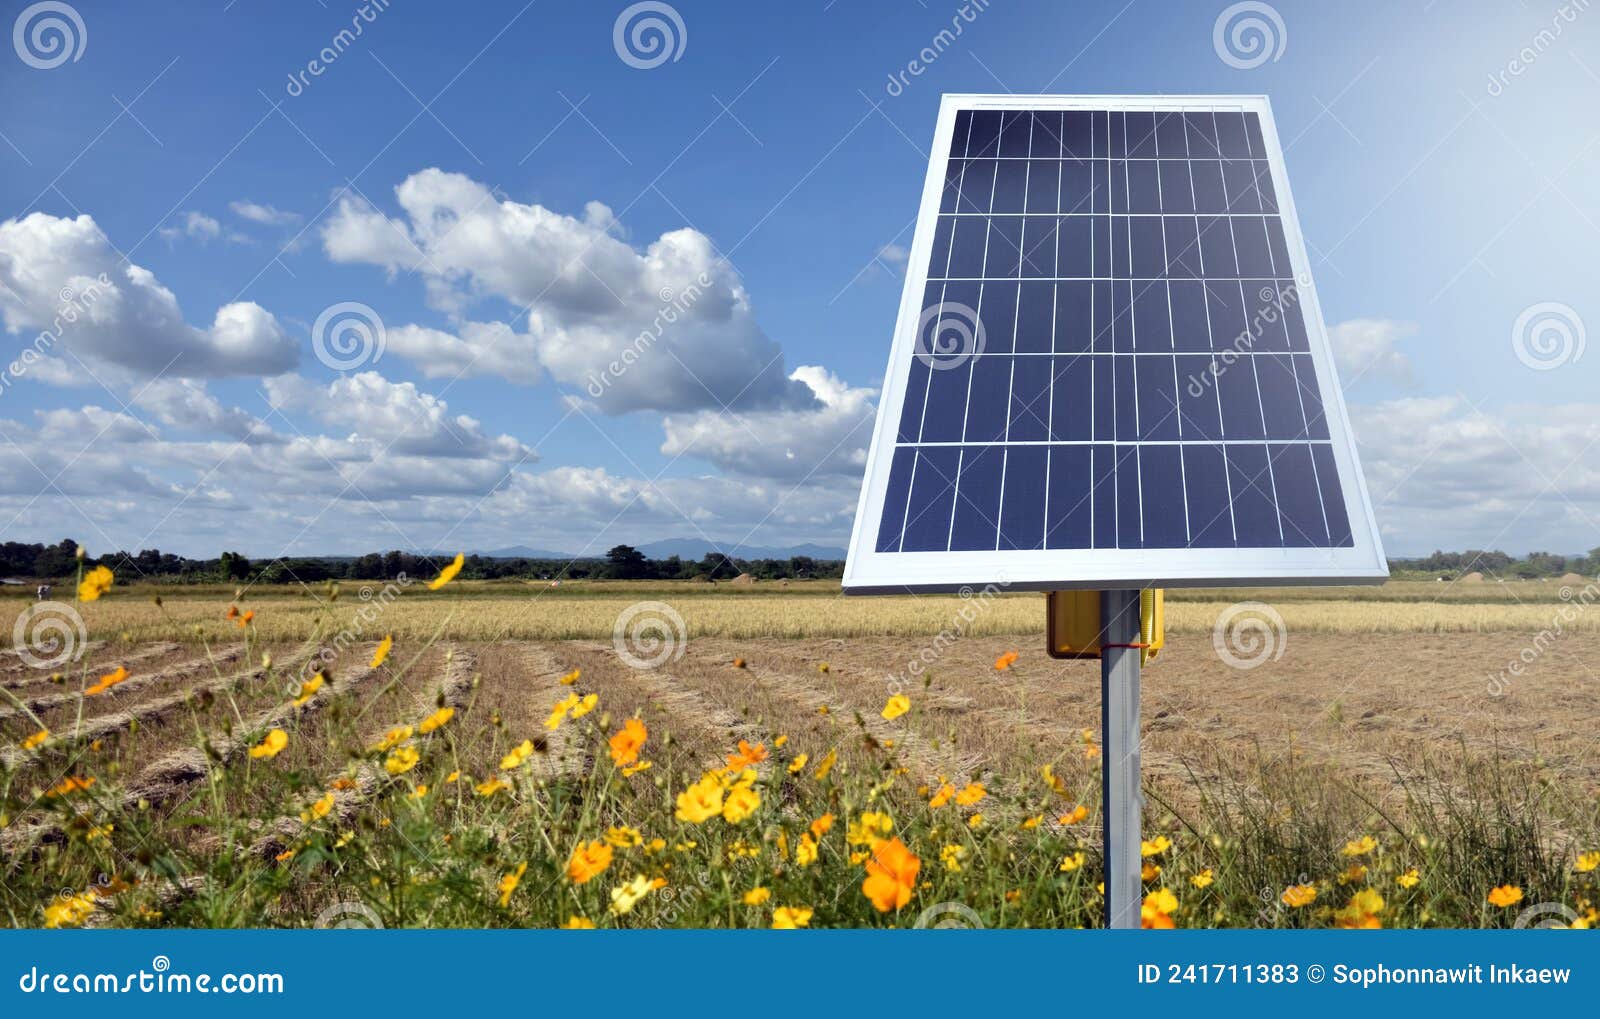 mini solar cell panal